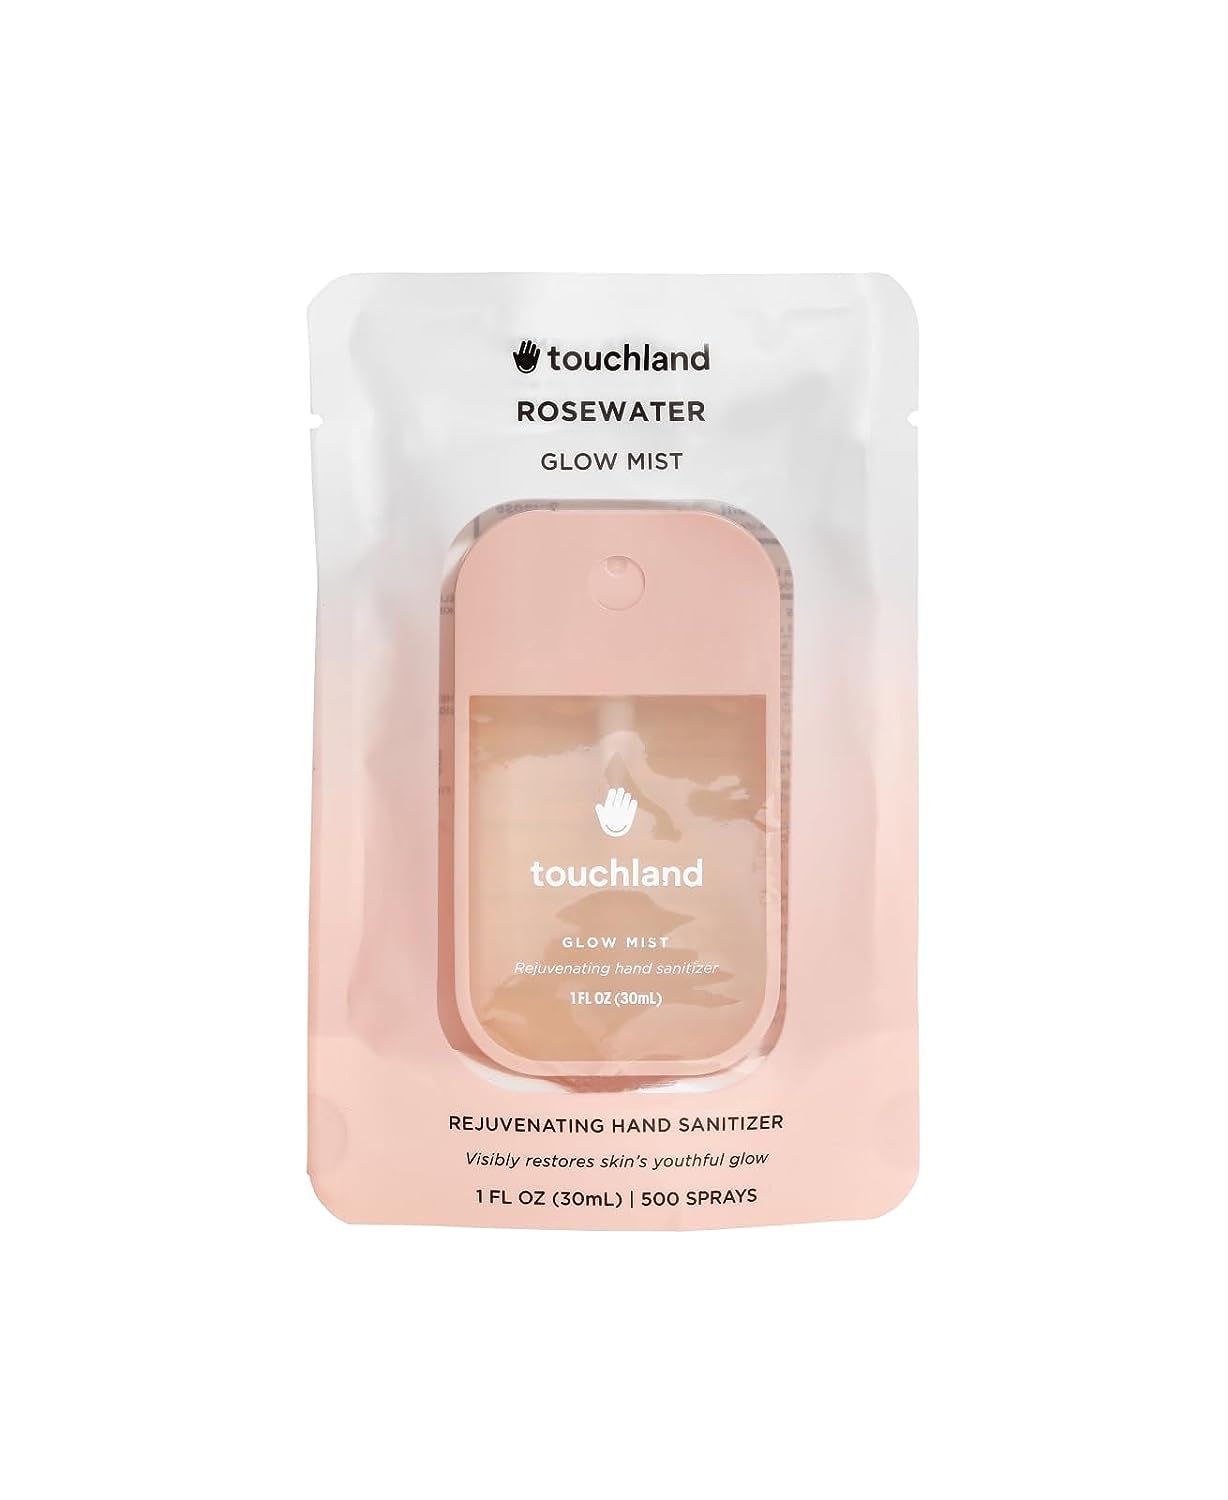 Touchland Glow Mist Rejuvenating Hand Sanitizer Spray, Rosewater scented, 500-Sprays each, 1FL OZ | Amazon (US)